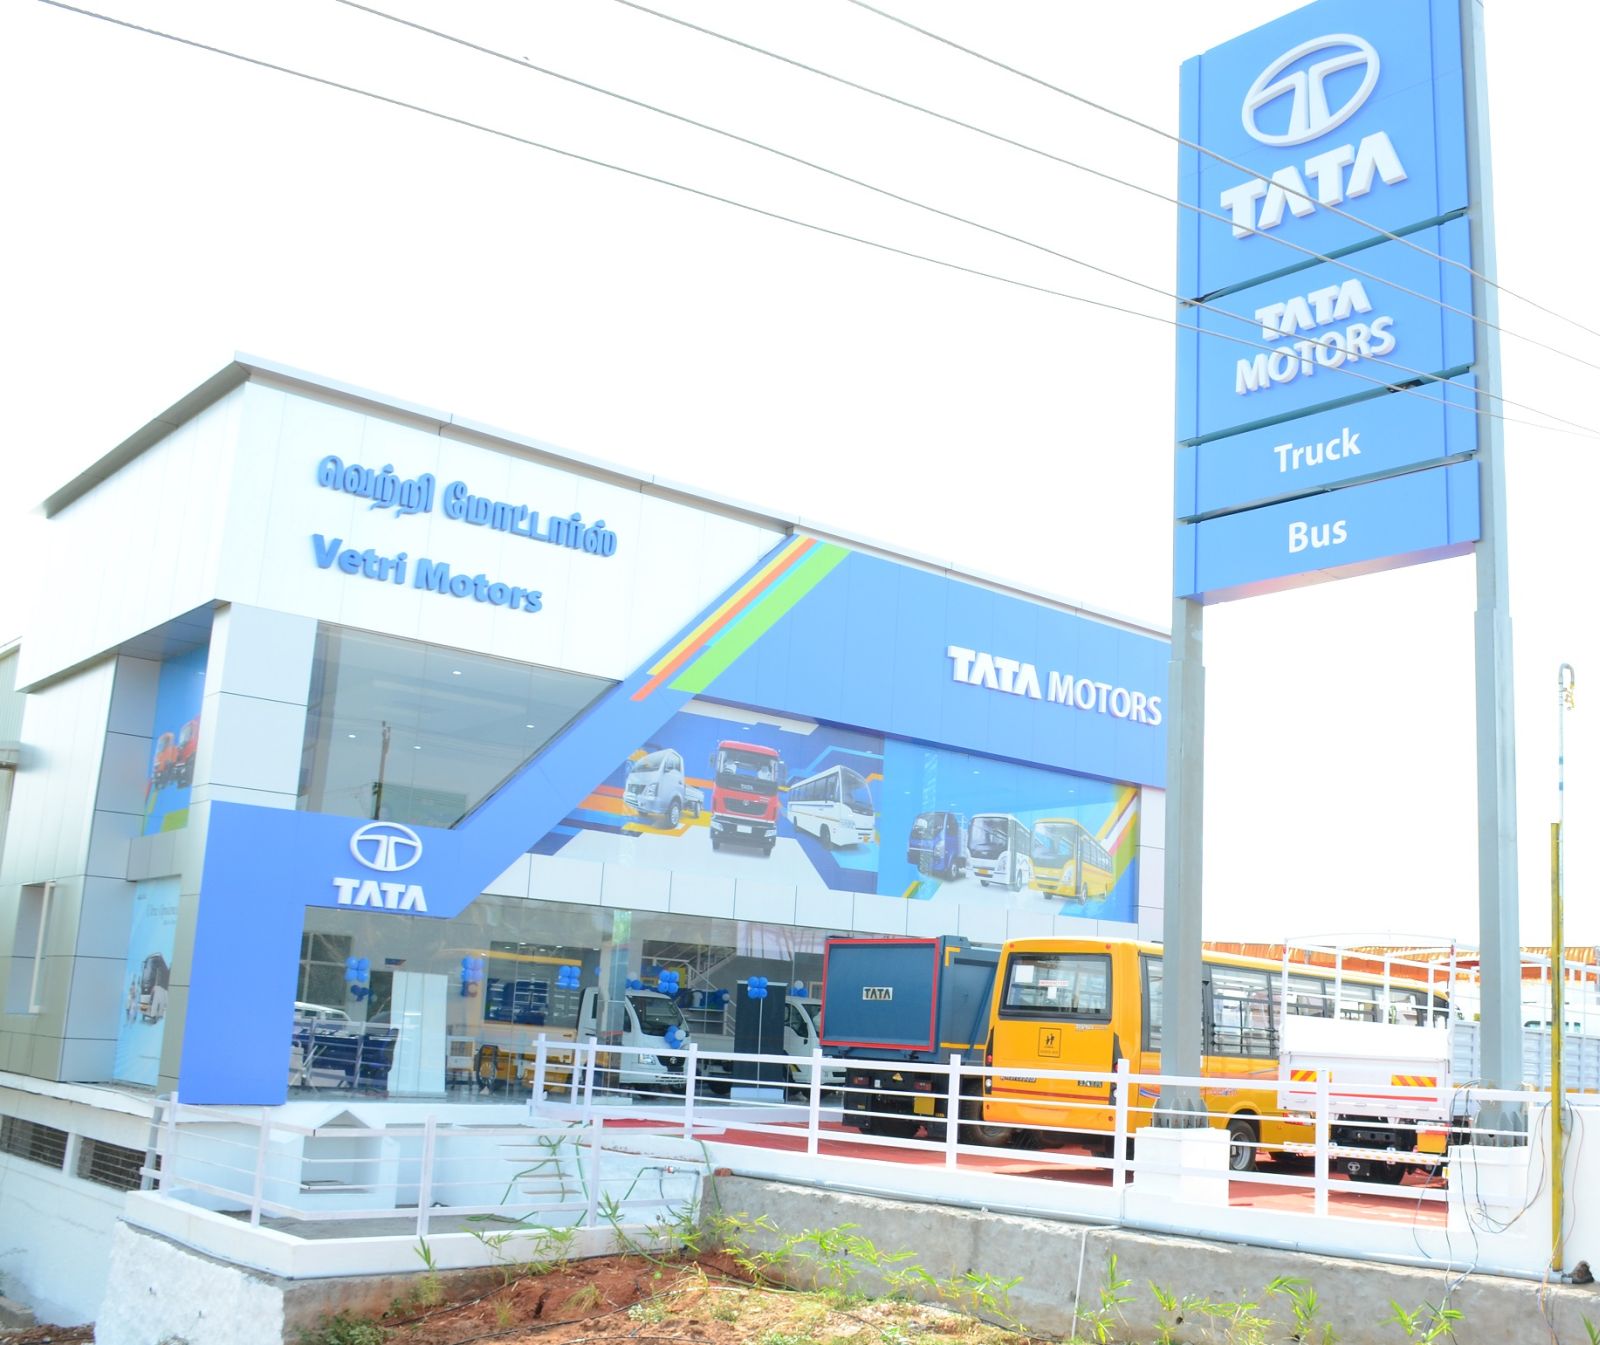 Tata Motors and Vetri Motors open new 3S commercial vehicle facility in Madurai (2)